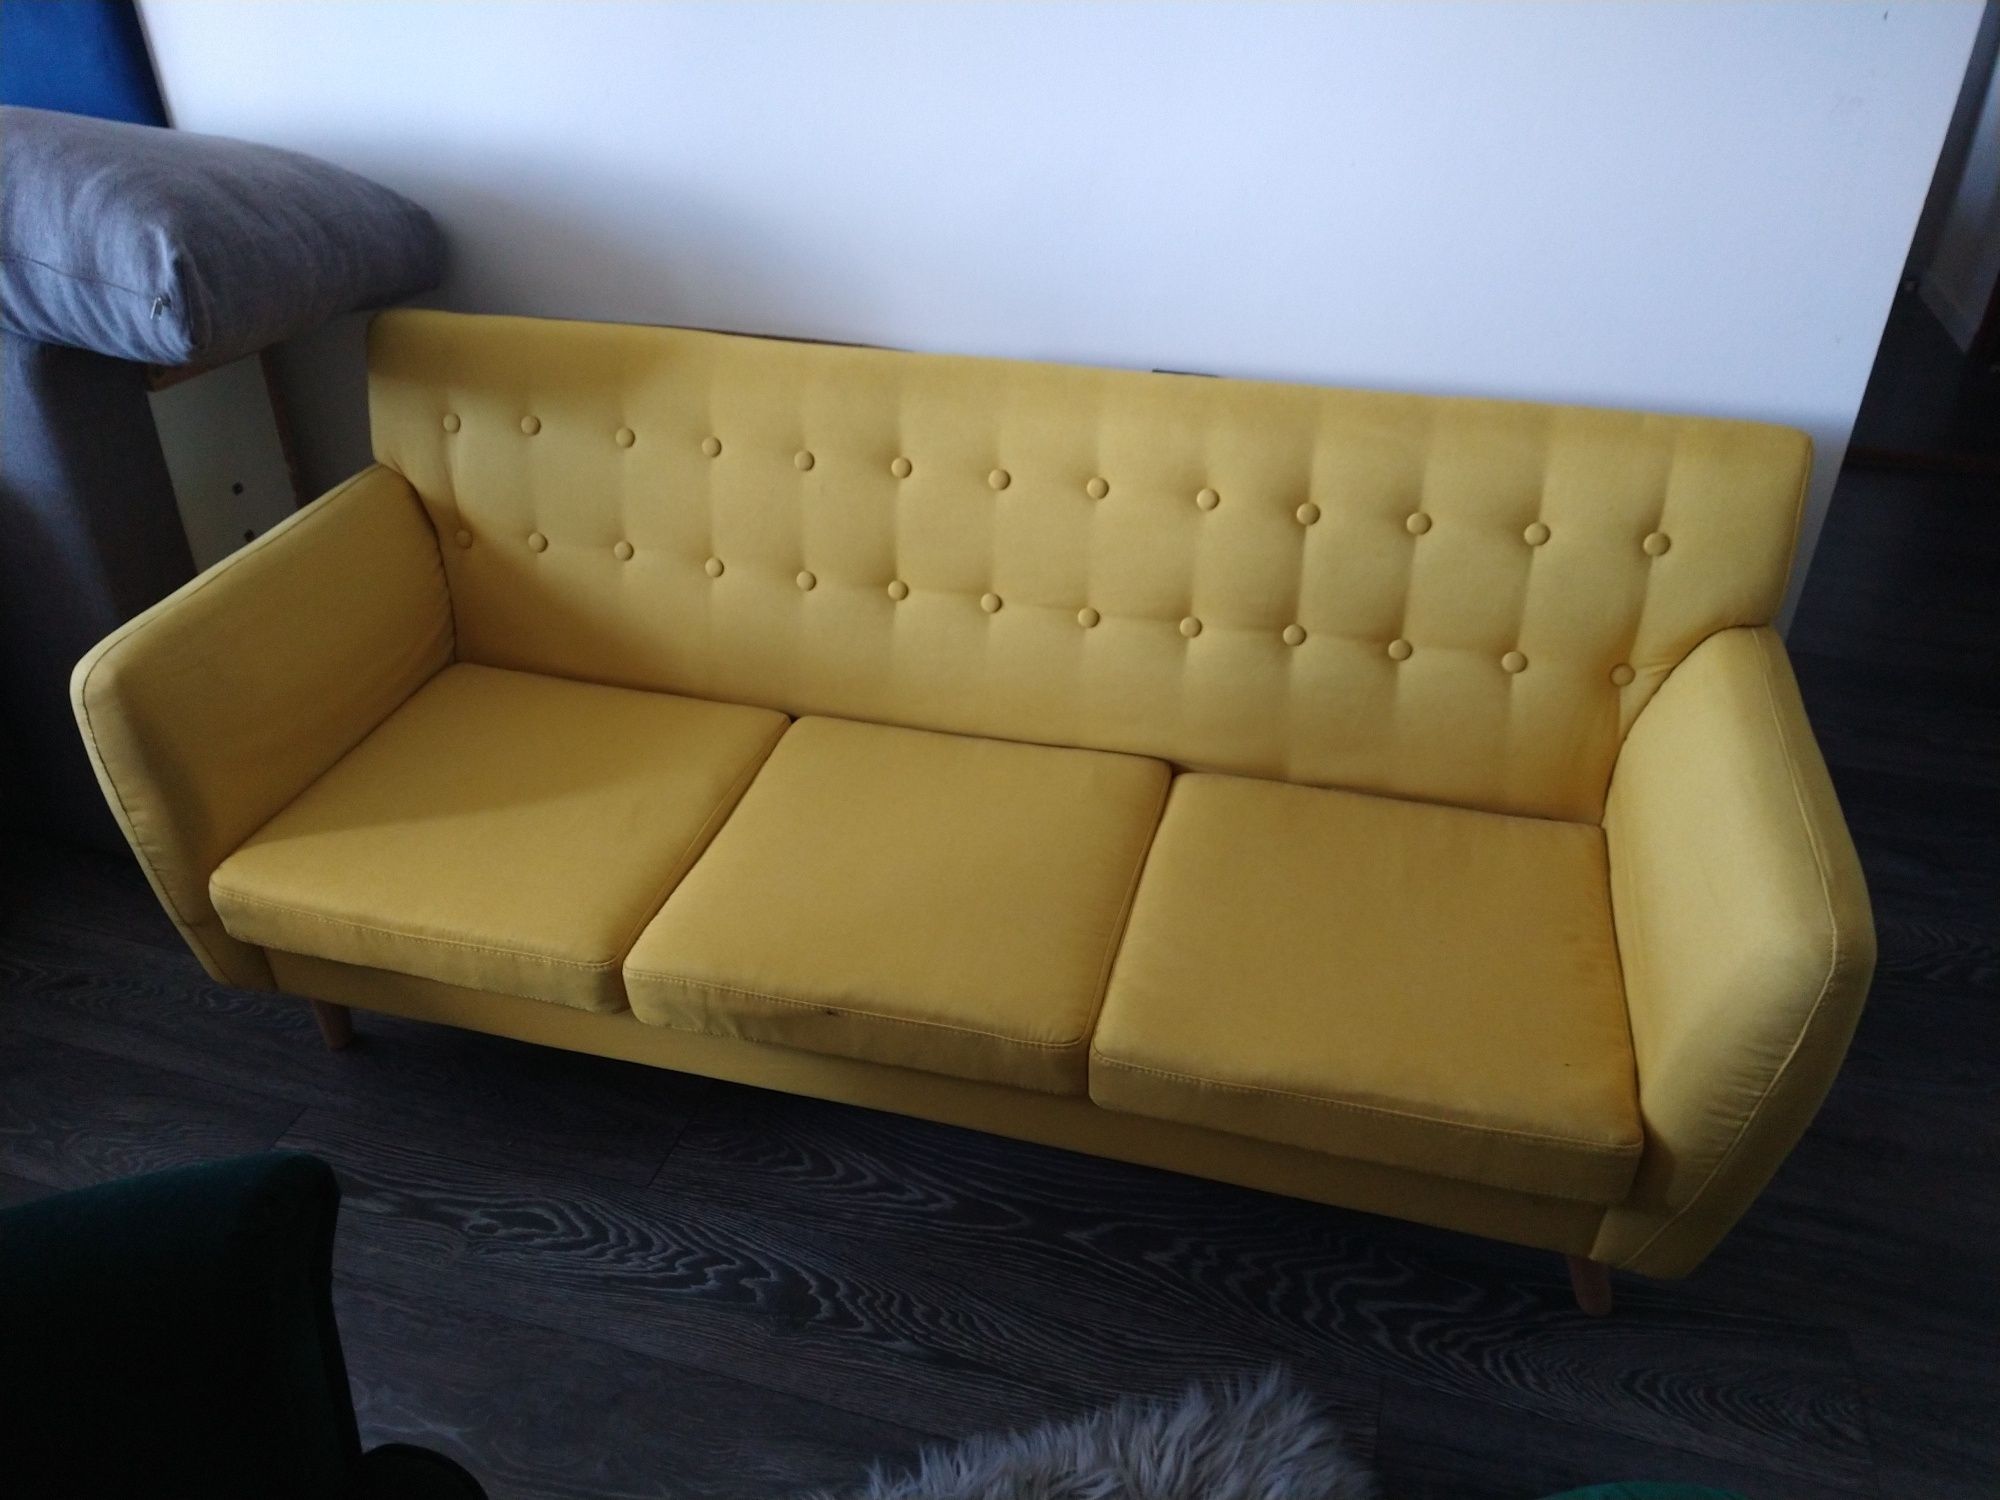 3-osoba żółta sofa pikowana LILIA

Stan bdb